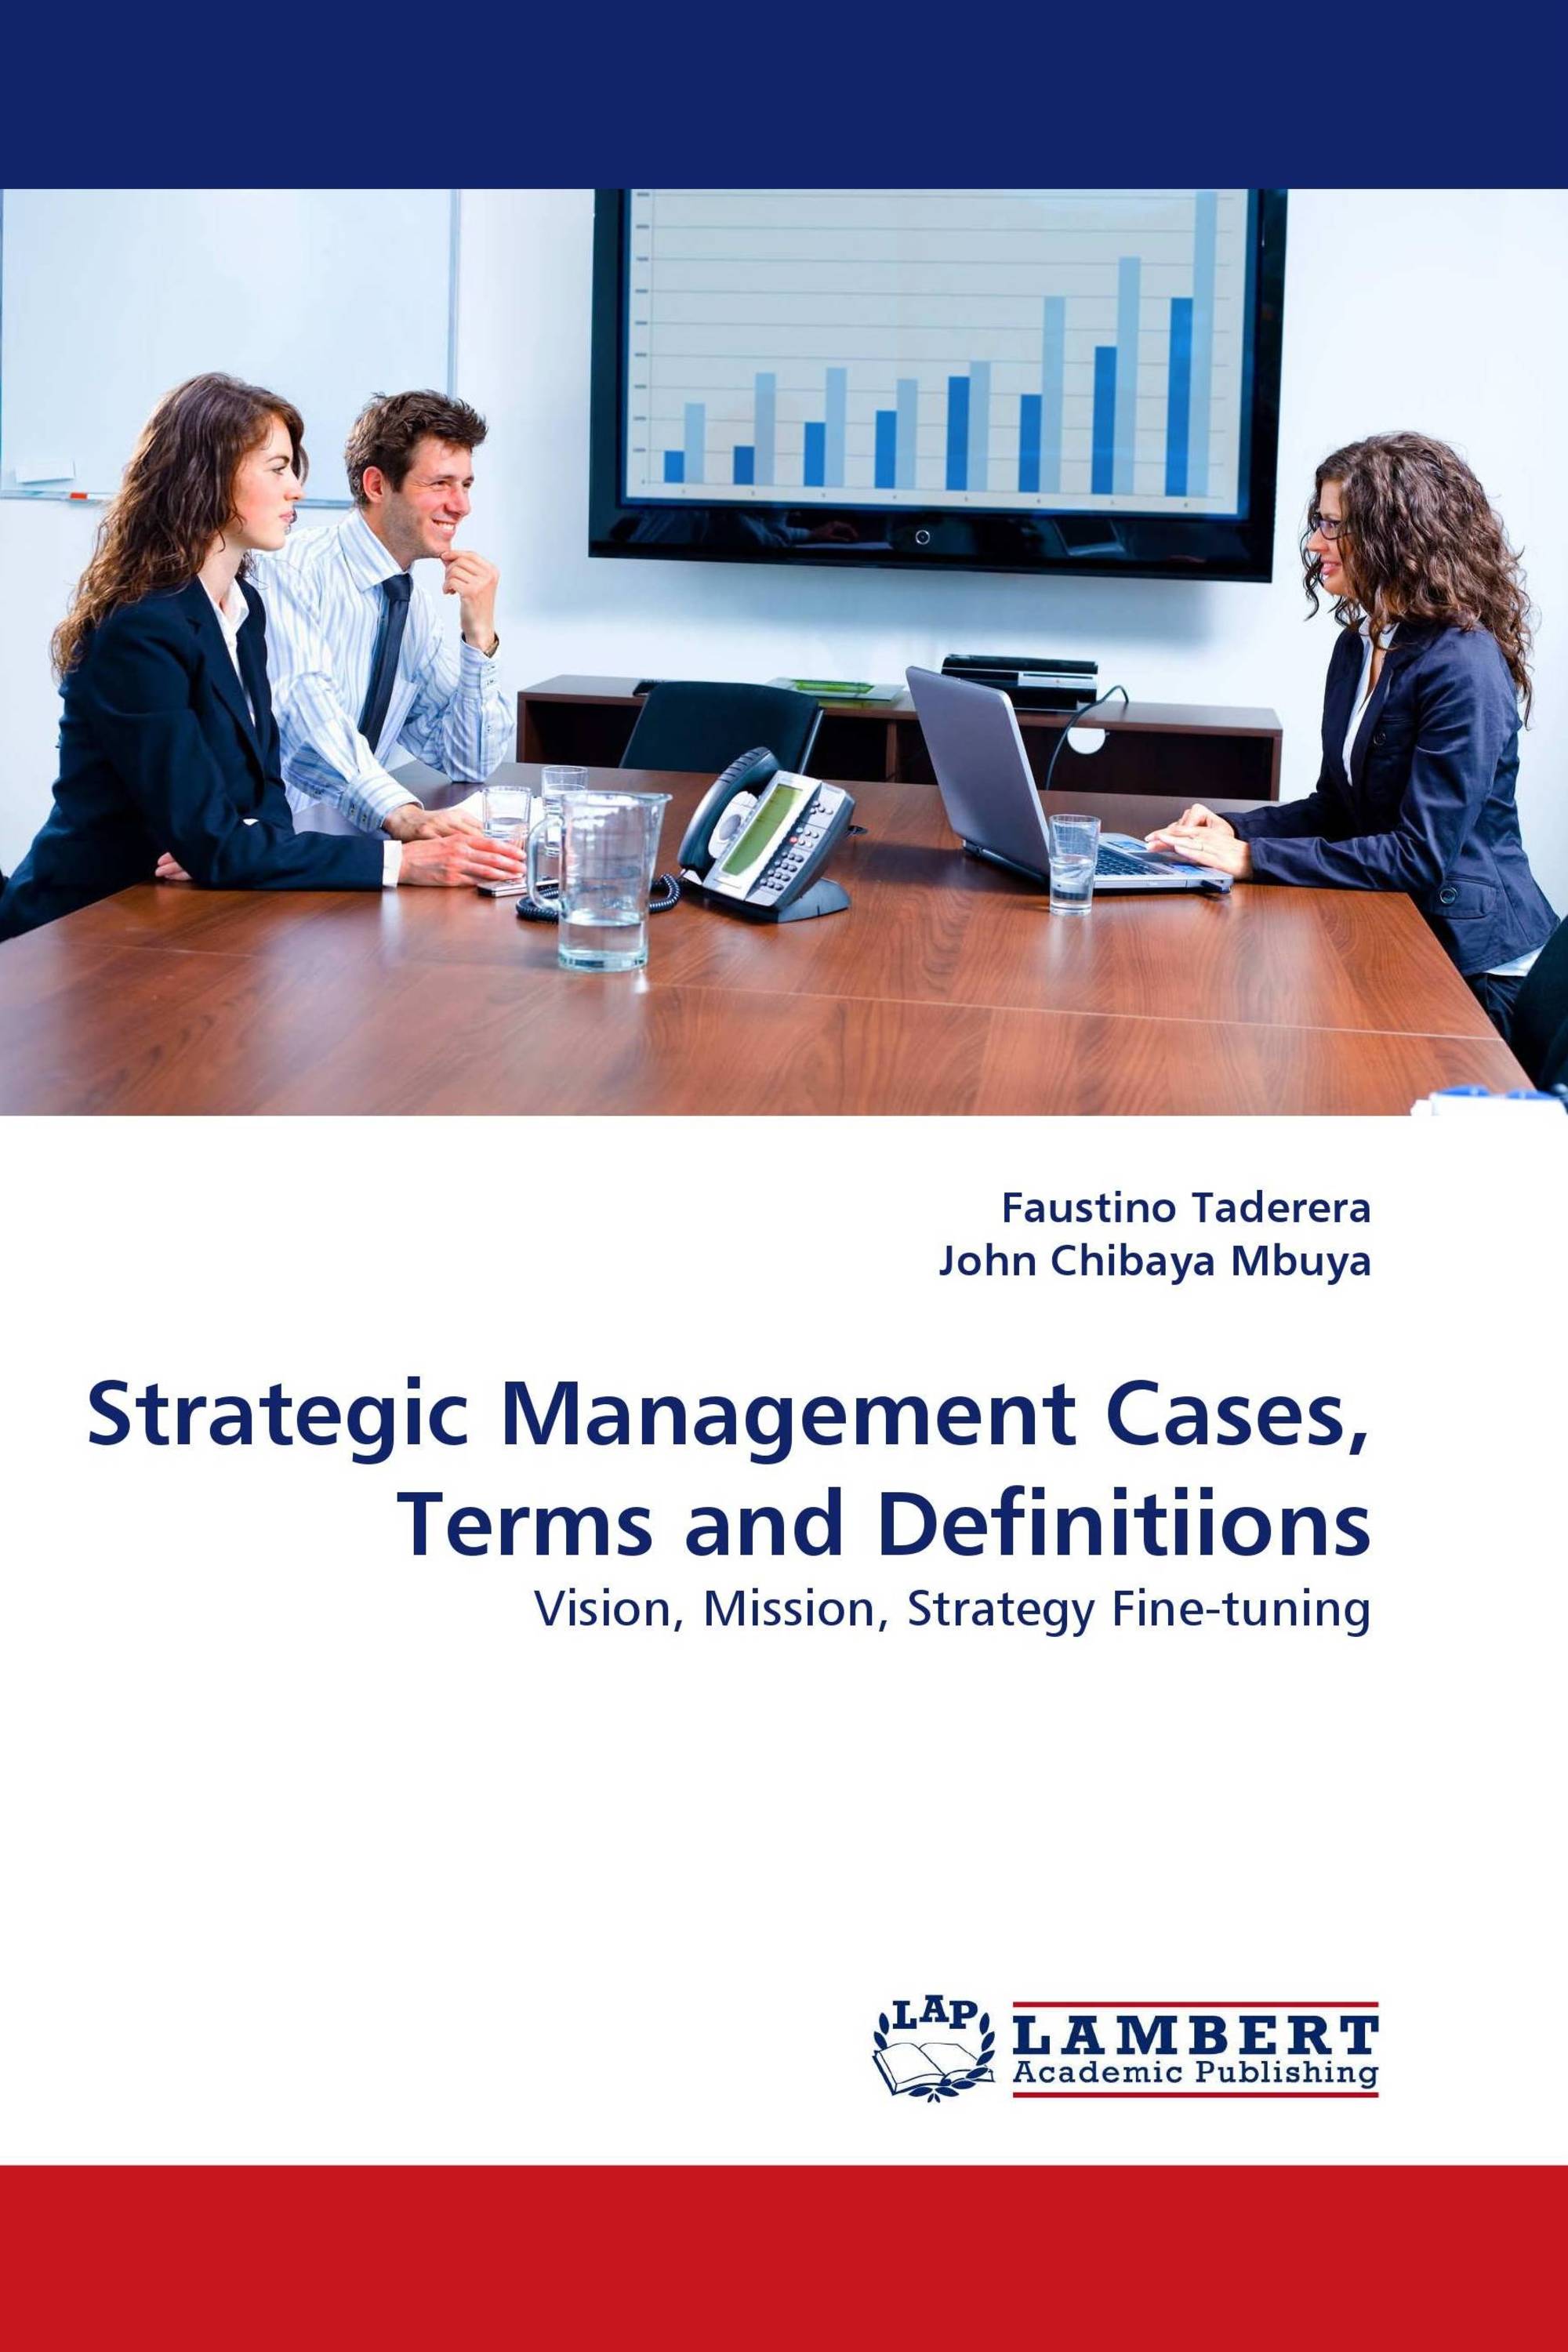 corporate strategic management case study